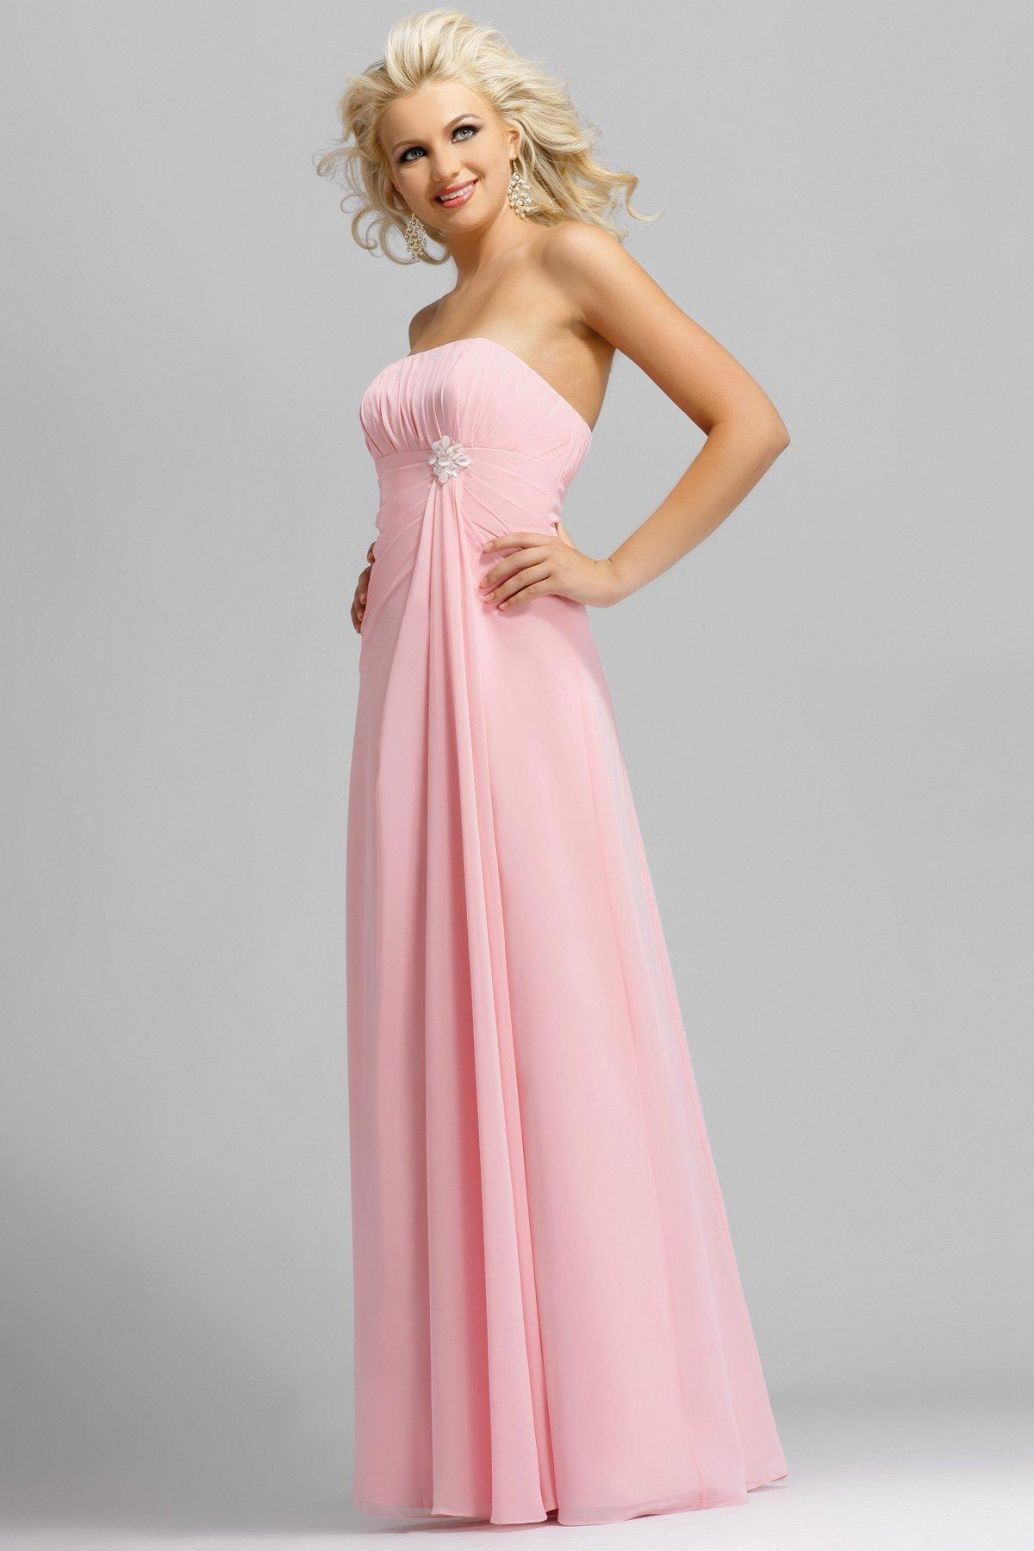 Wedding Gown Images
 Long Bright Pink Bridesmaid Dress Designs Wedding Dress